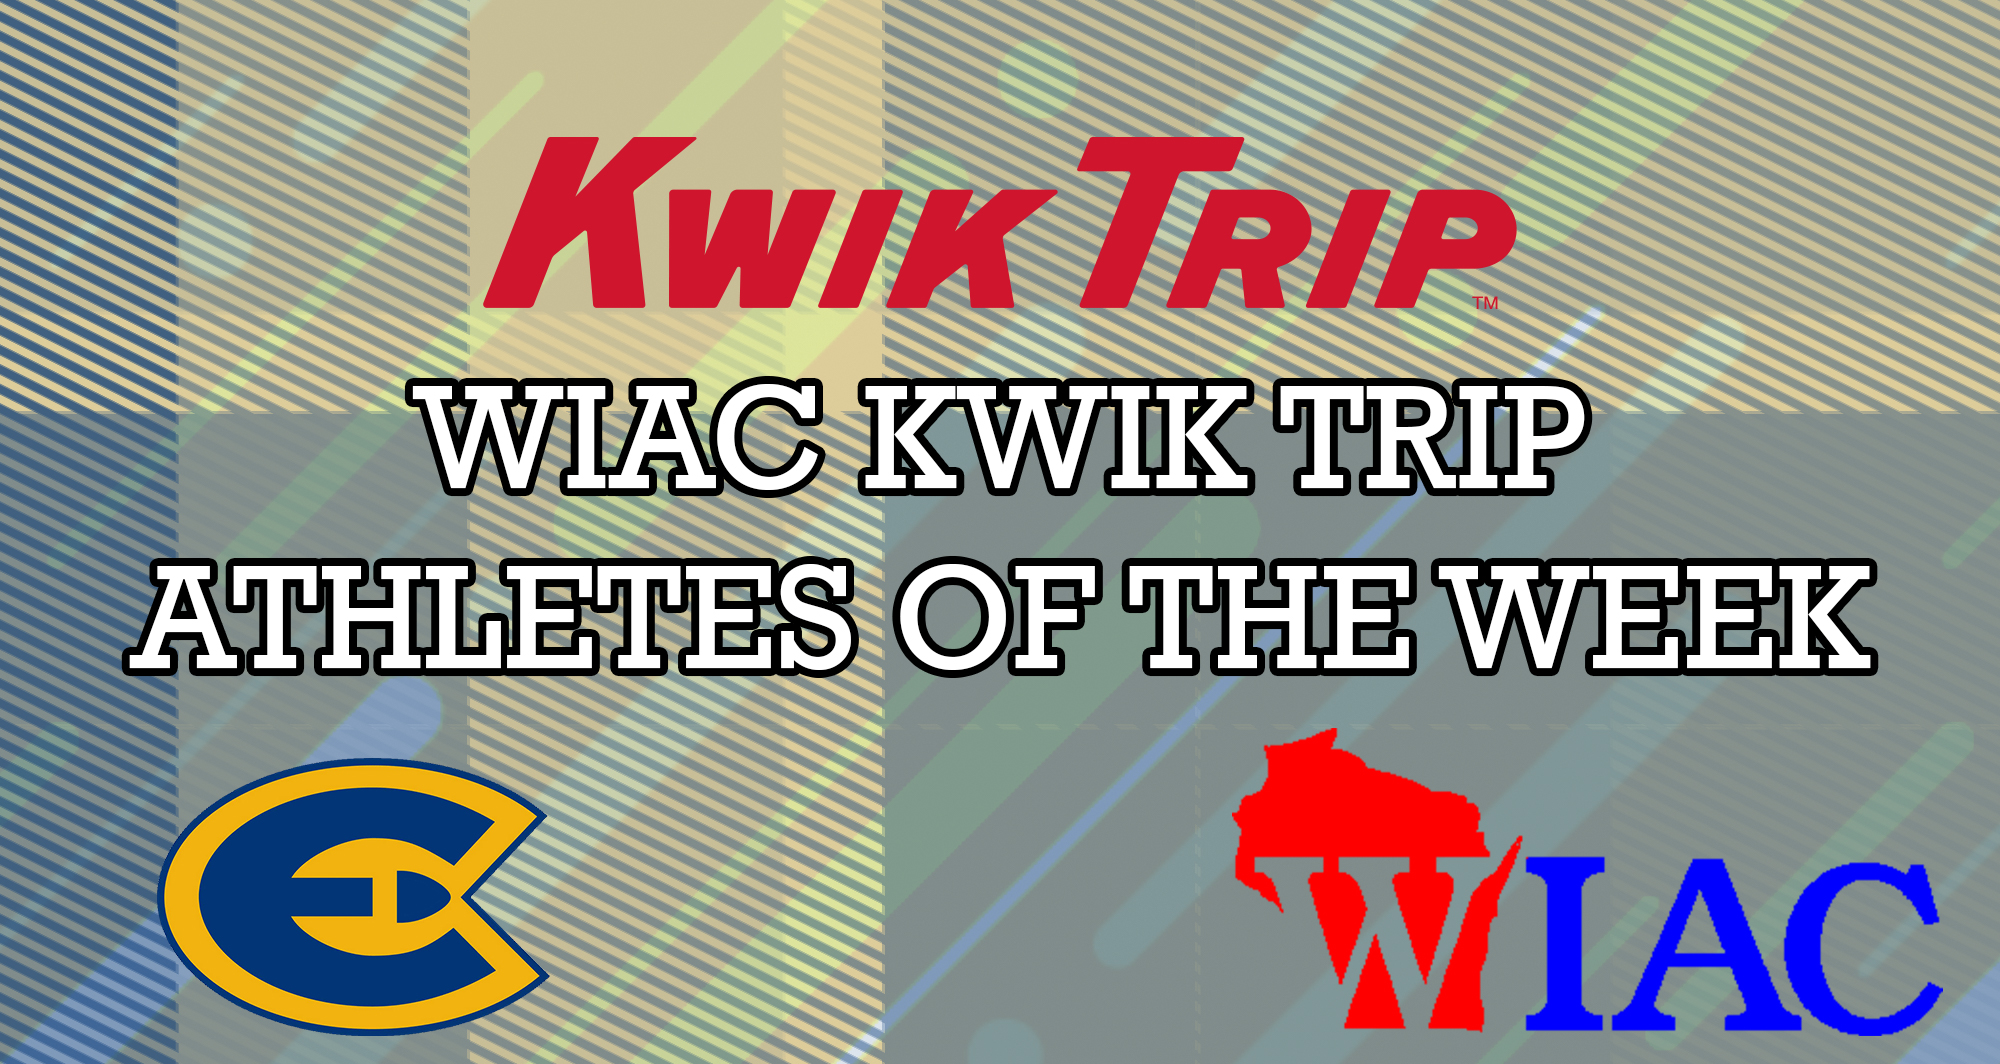 Ruden, Kabe, and Stensberg named Kwik Trip Athletes of the Week